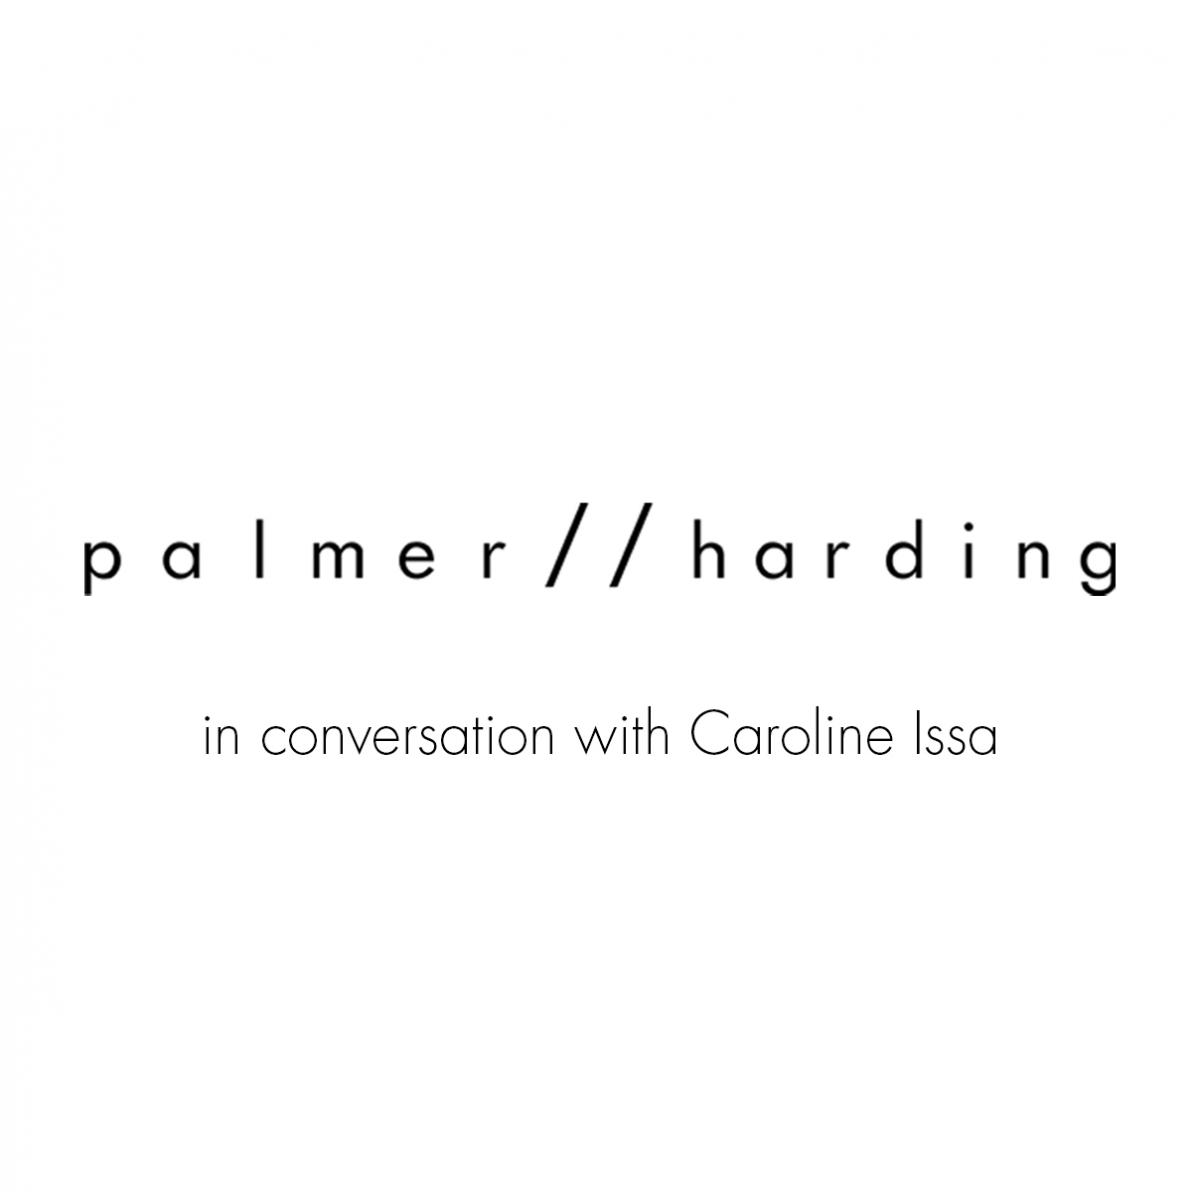 palmer//harding in conversation